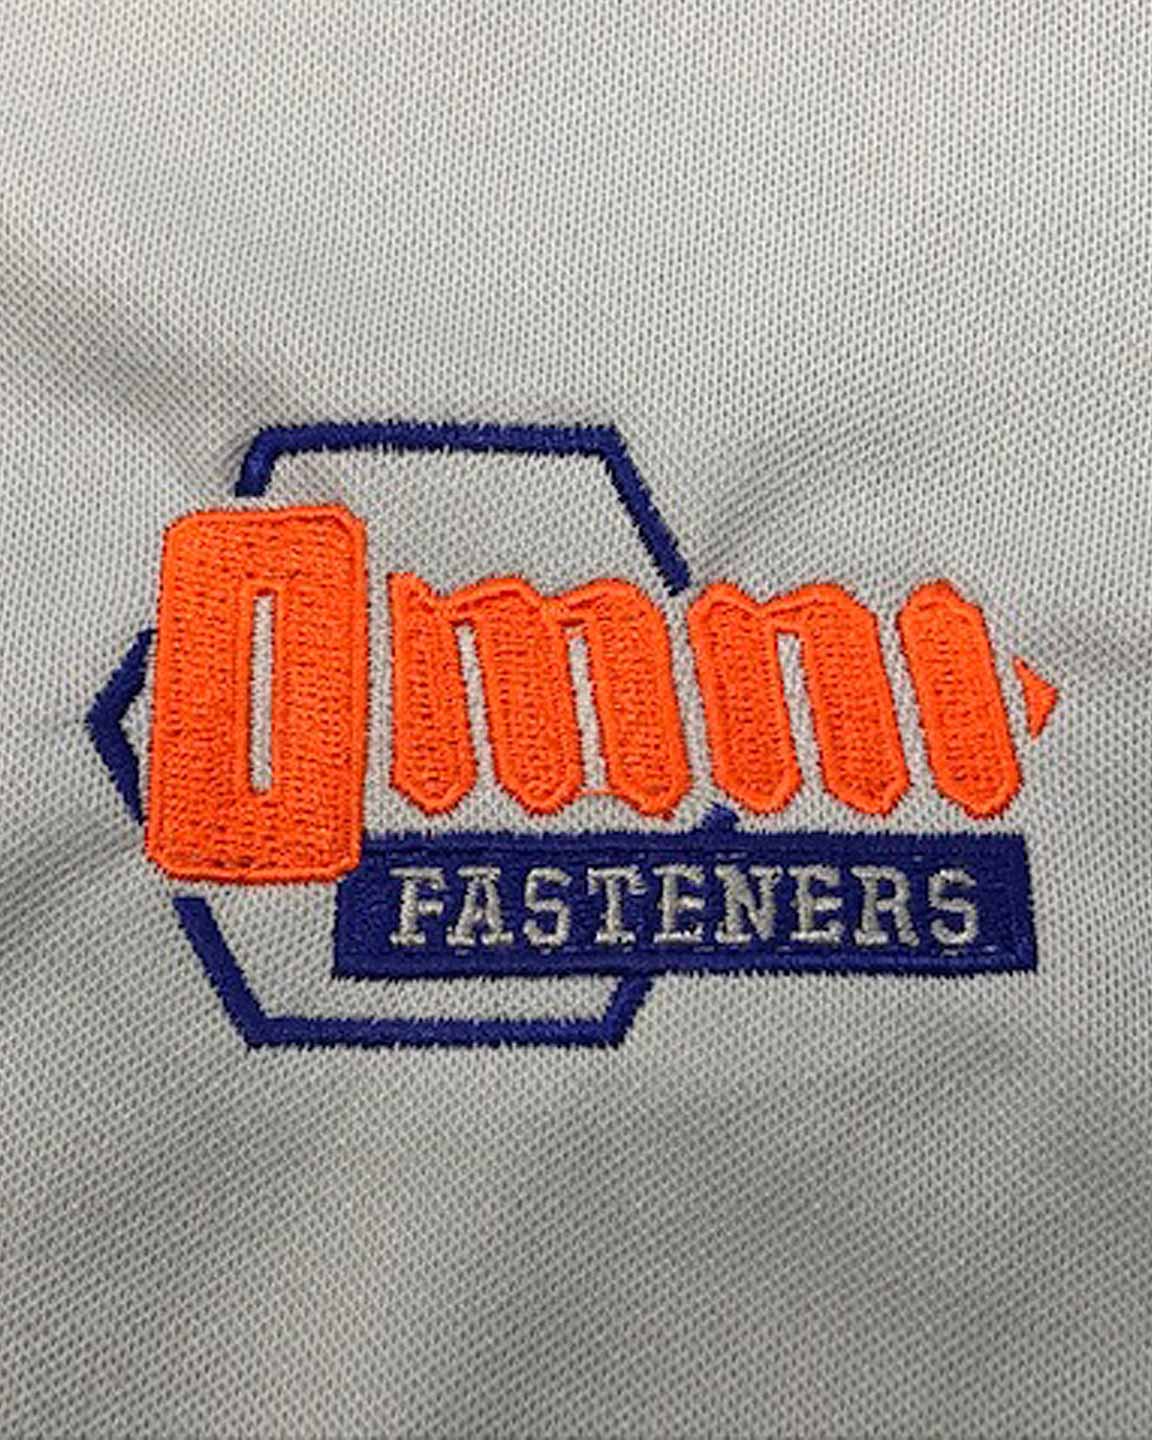 Omni Fasteners embroidered logo